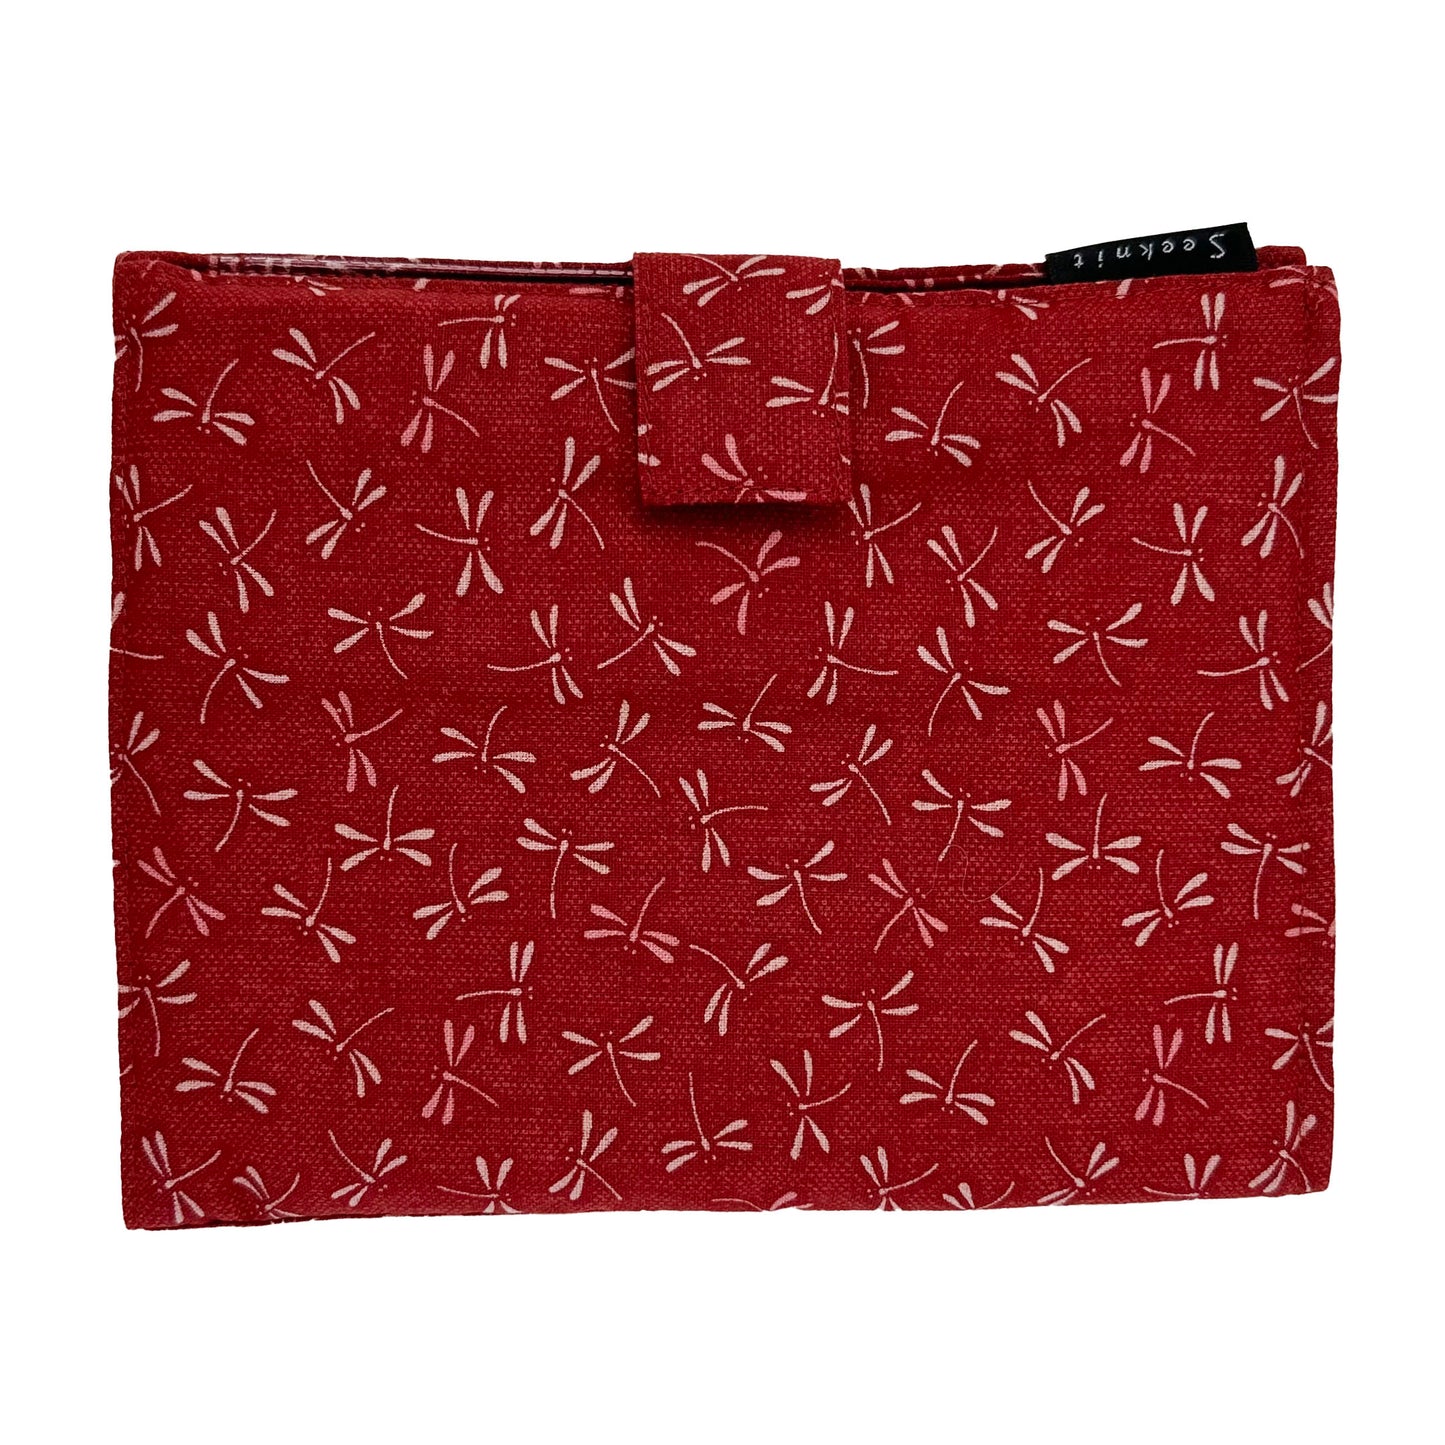 Kinki Amibari SeeKnit Koshitsu Crochet Hook Set, 7 Sizes - Dragonfly Red